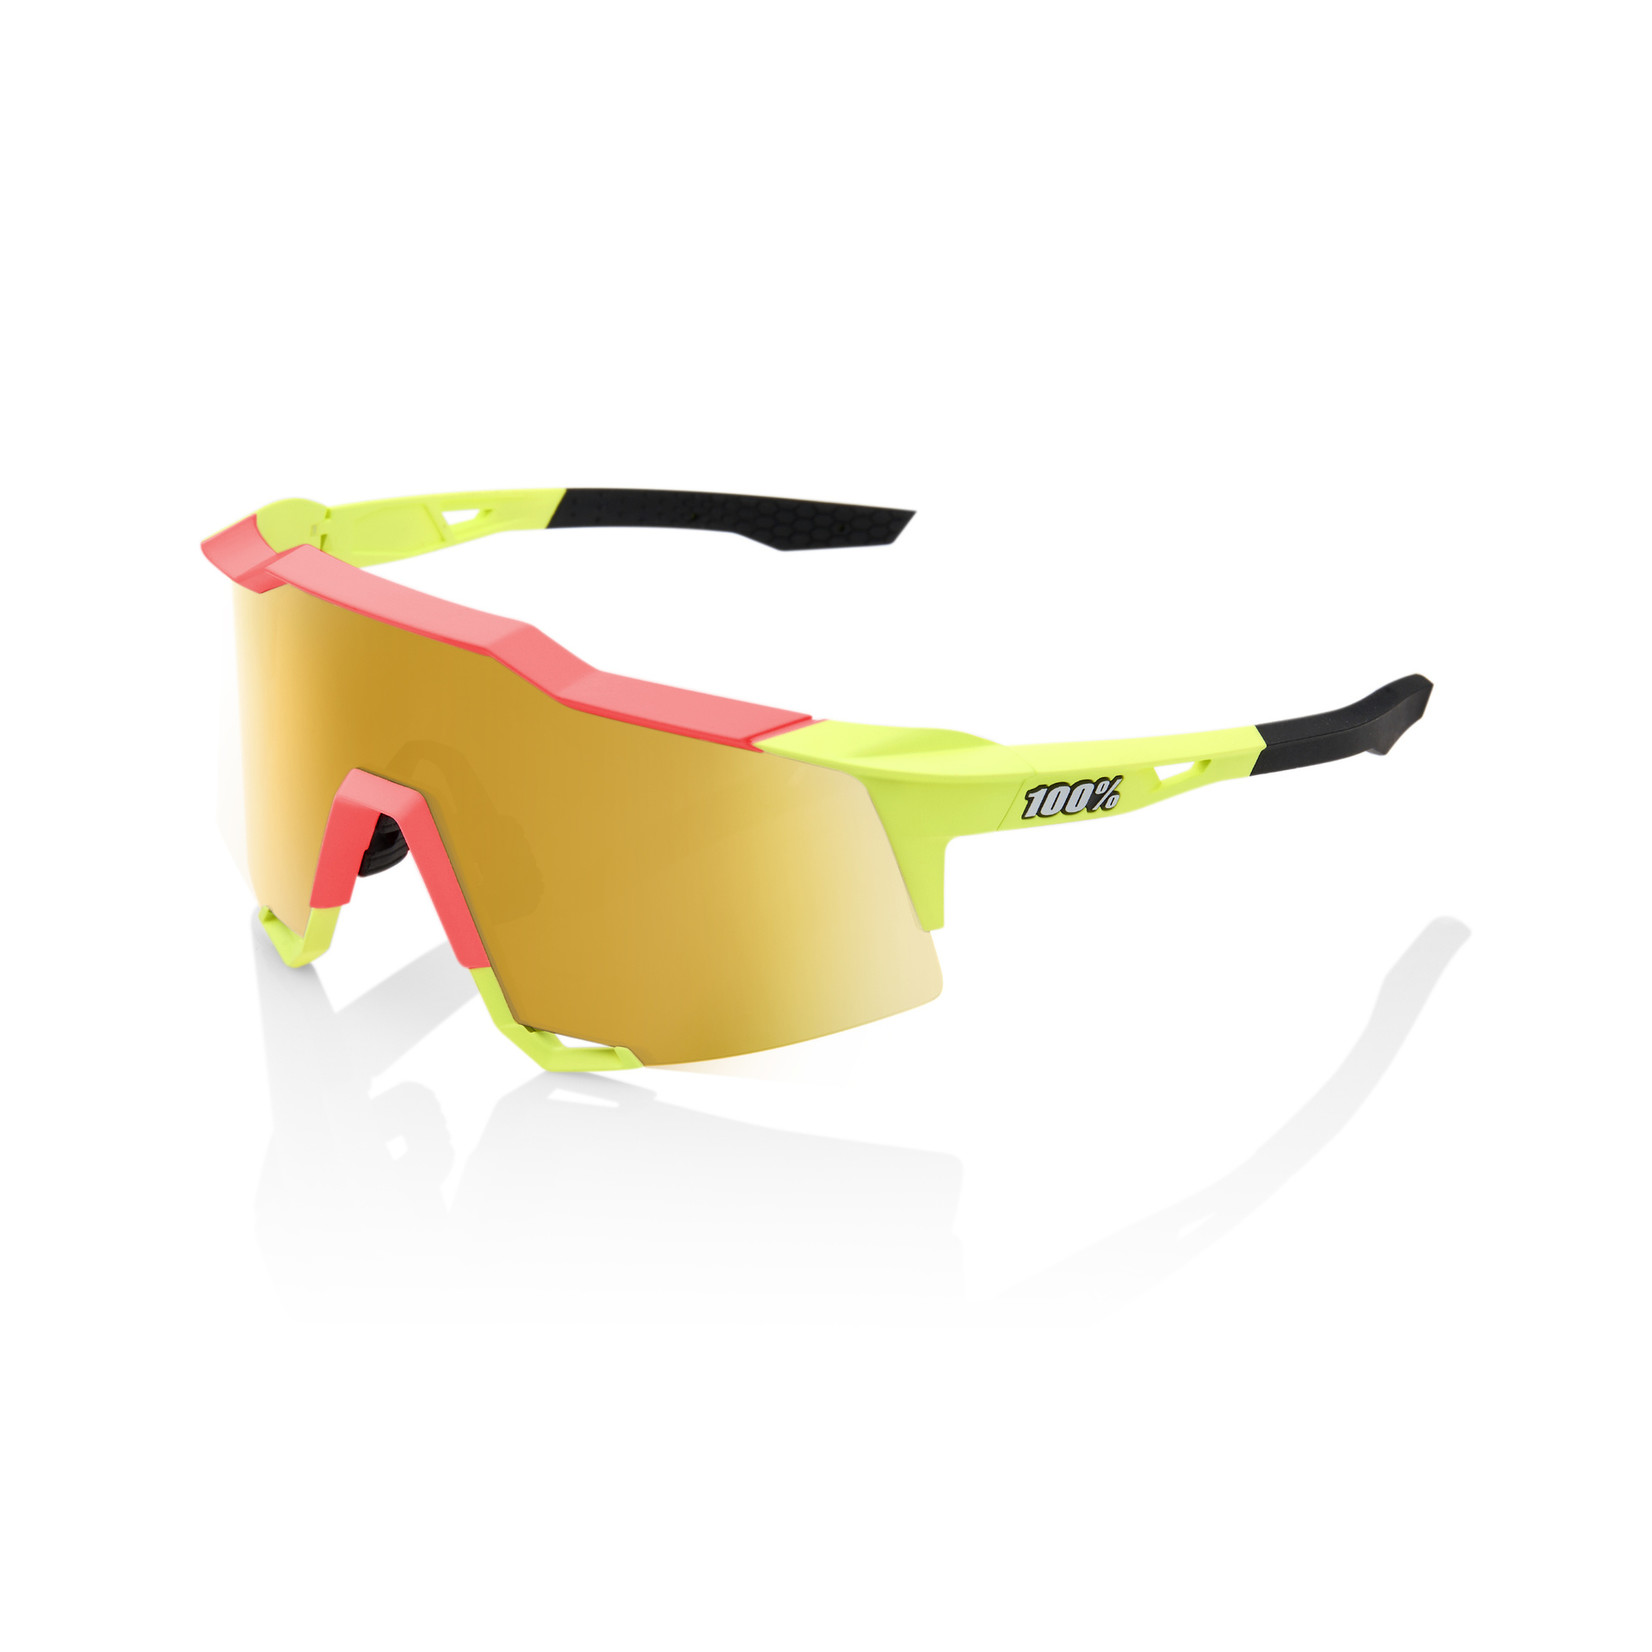 100 Percent 100% Speedcraft Bike Sunglasses Matte Washed Out Neon Yellow - Flash Gold Mirror